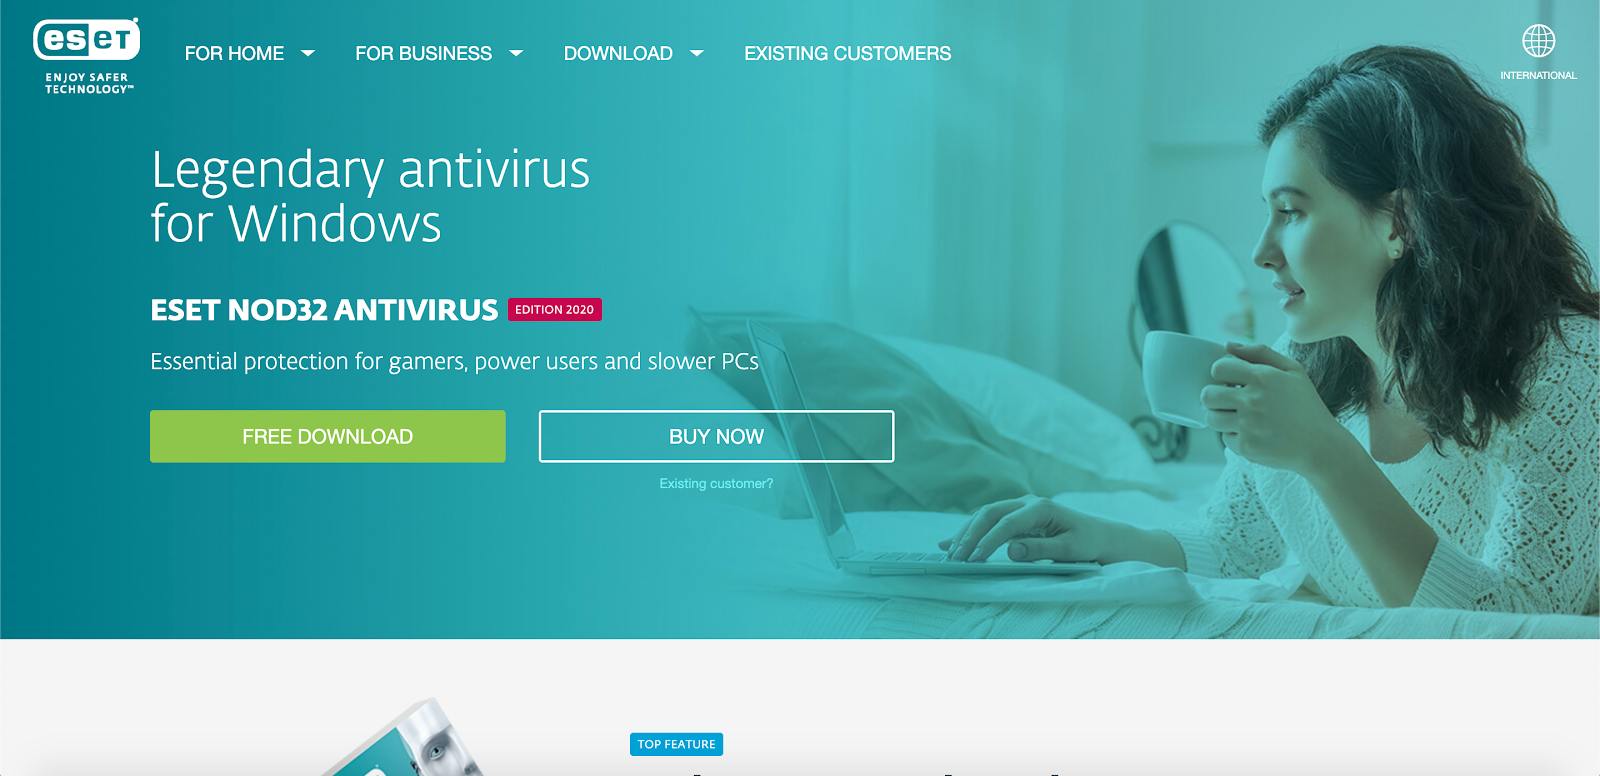 eset nod32 antivirus download free